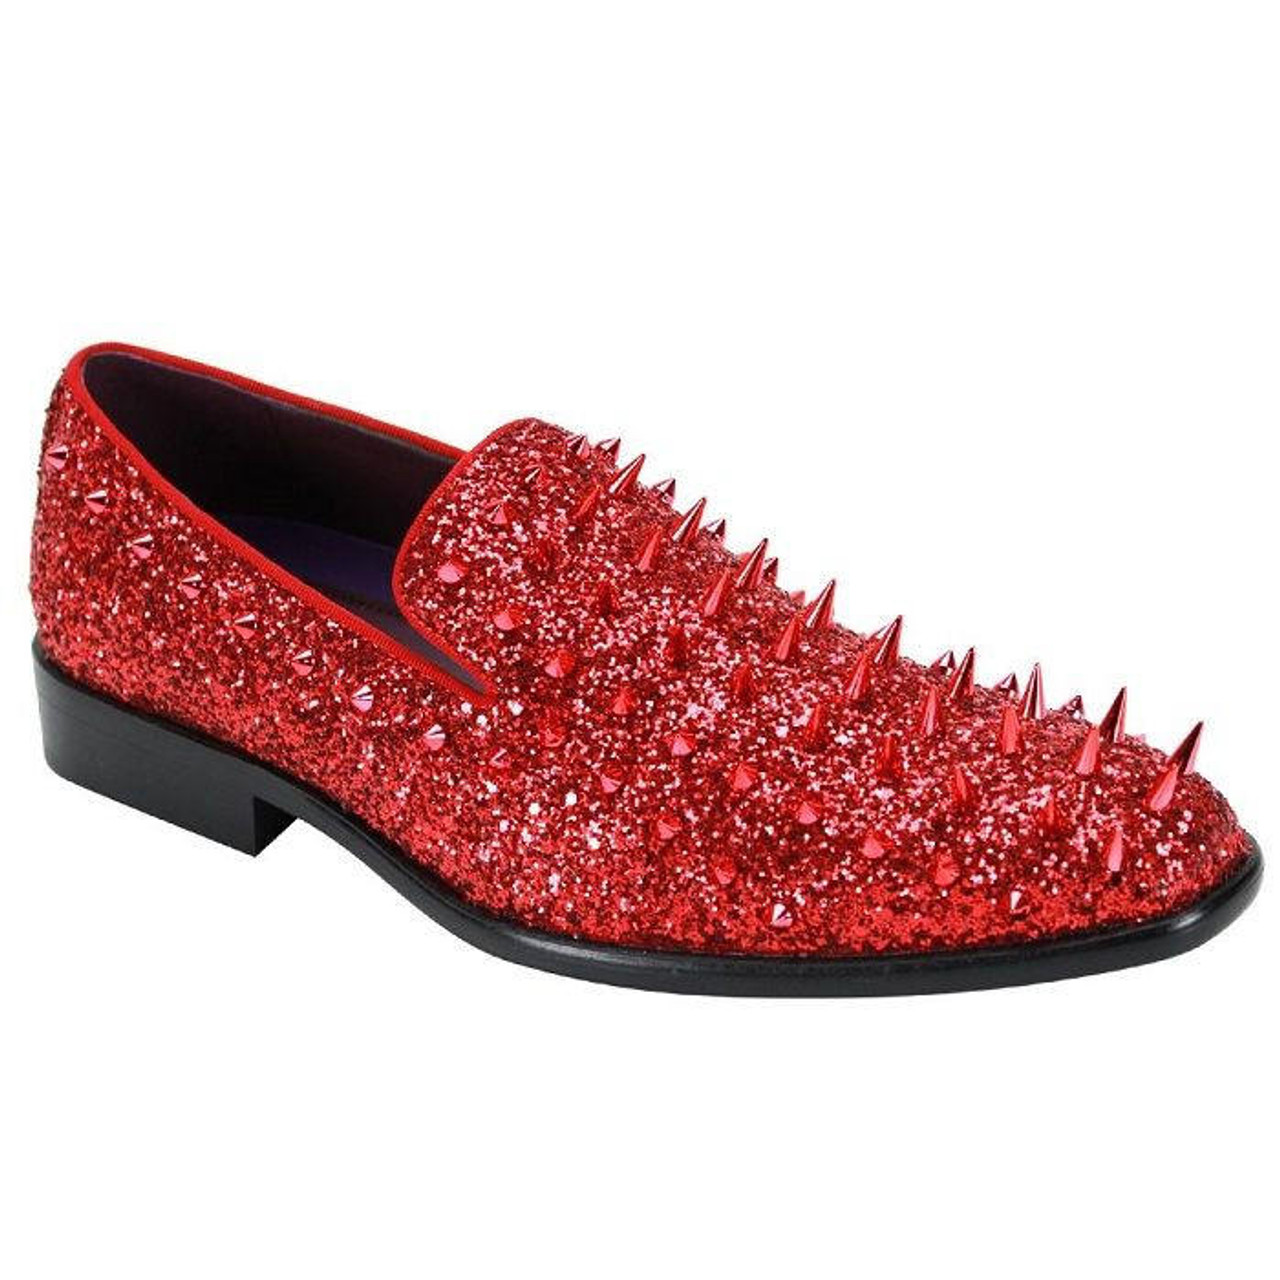 Mens Red Glitter Loafers - Modern Dress Shoe - Prom - Wedding